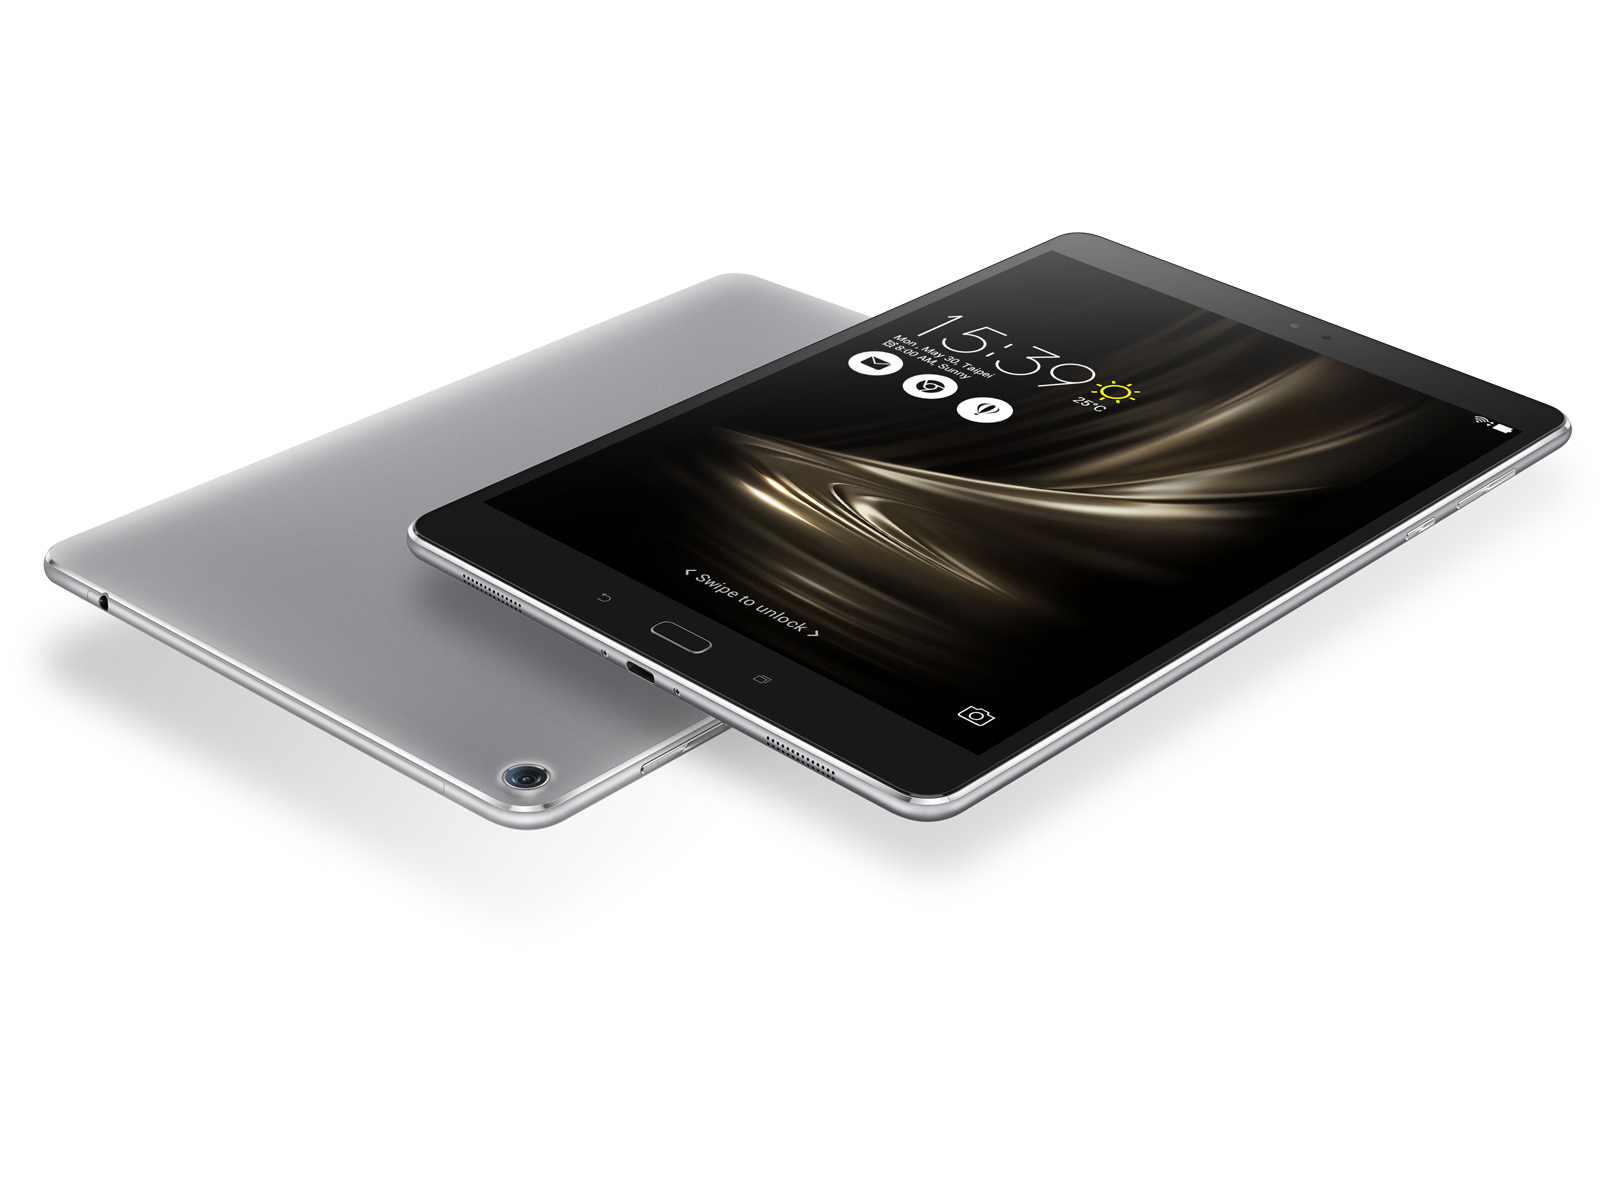 Asus ZenPad 3s 10 (Z500M-1H006A) Tablet Review - NotebookCheck.net 